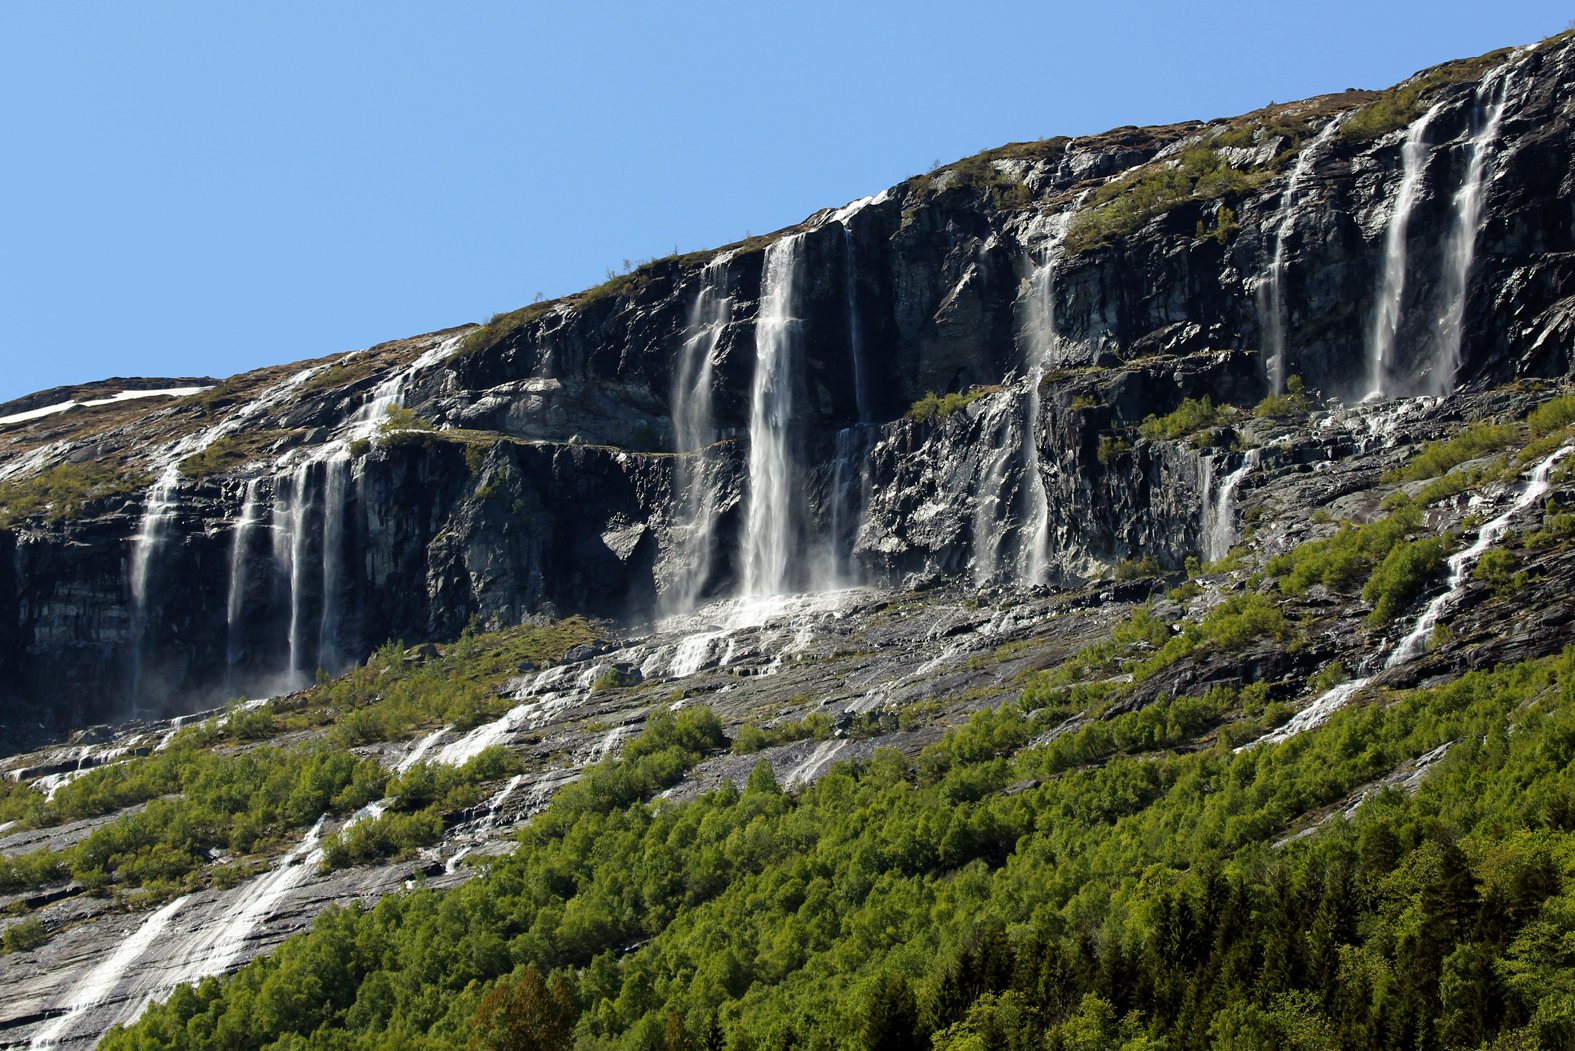 The 9 Brothers streaming waterfalls in Aga. © Arvid Aga.  www.arvid-aga.no